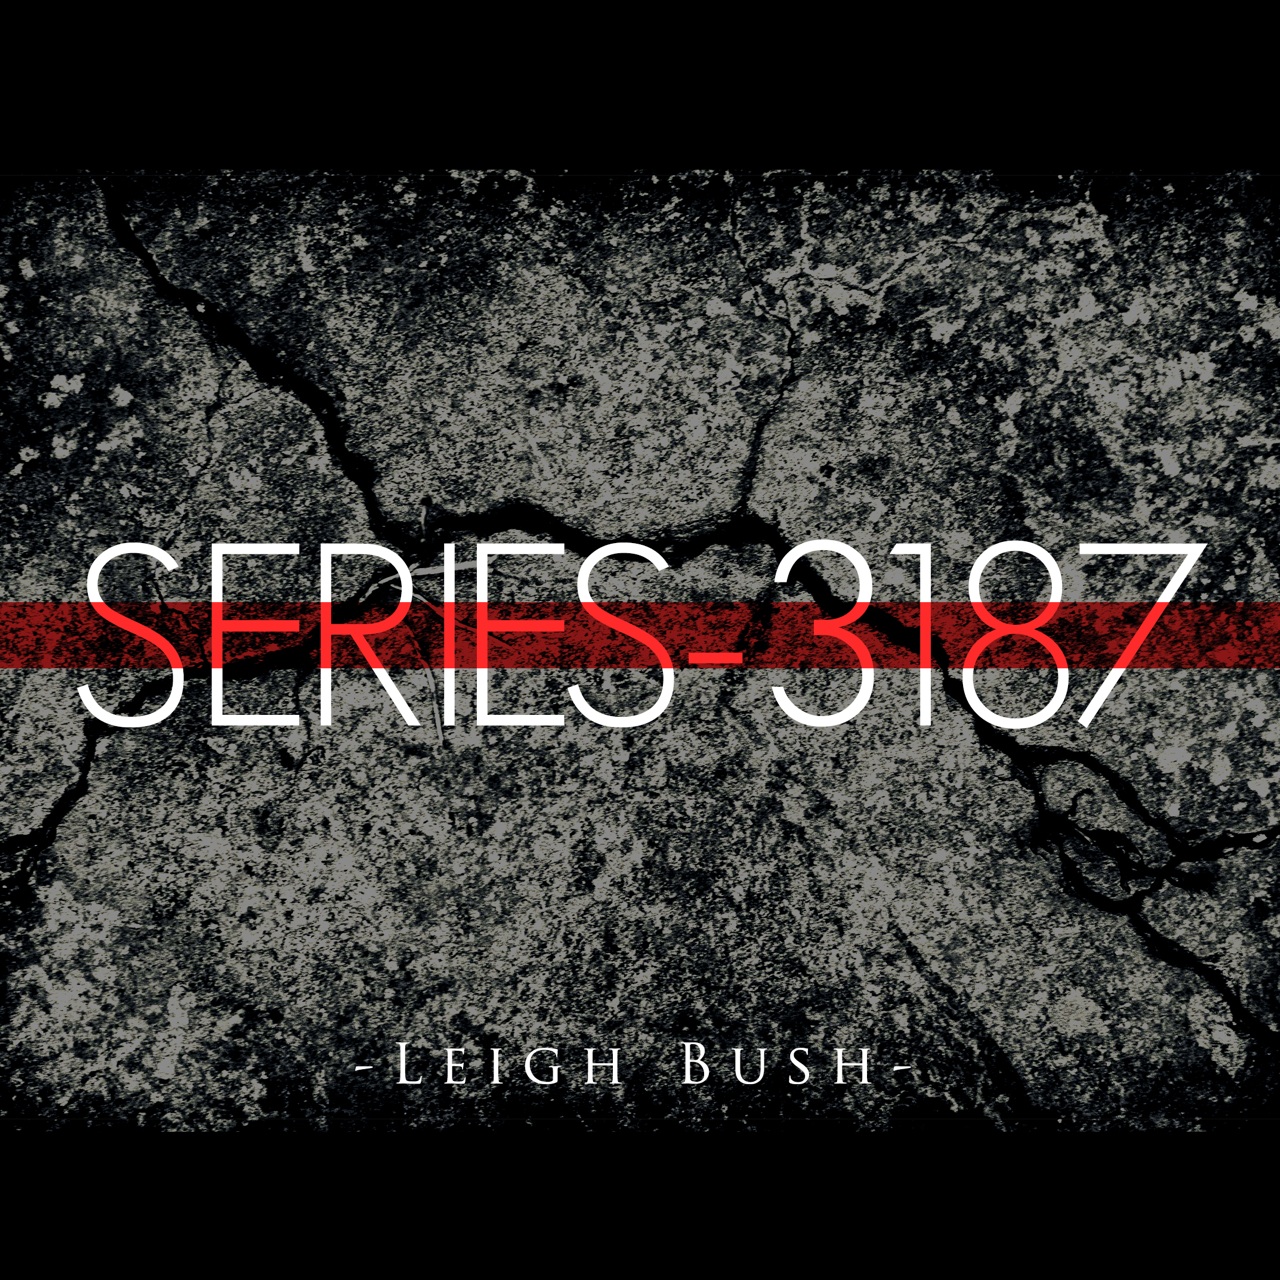 New Music: Leigh Bush “Series 3187” (EP)